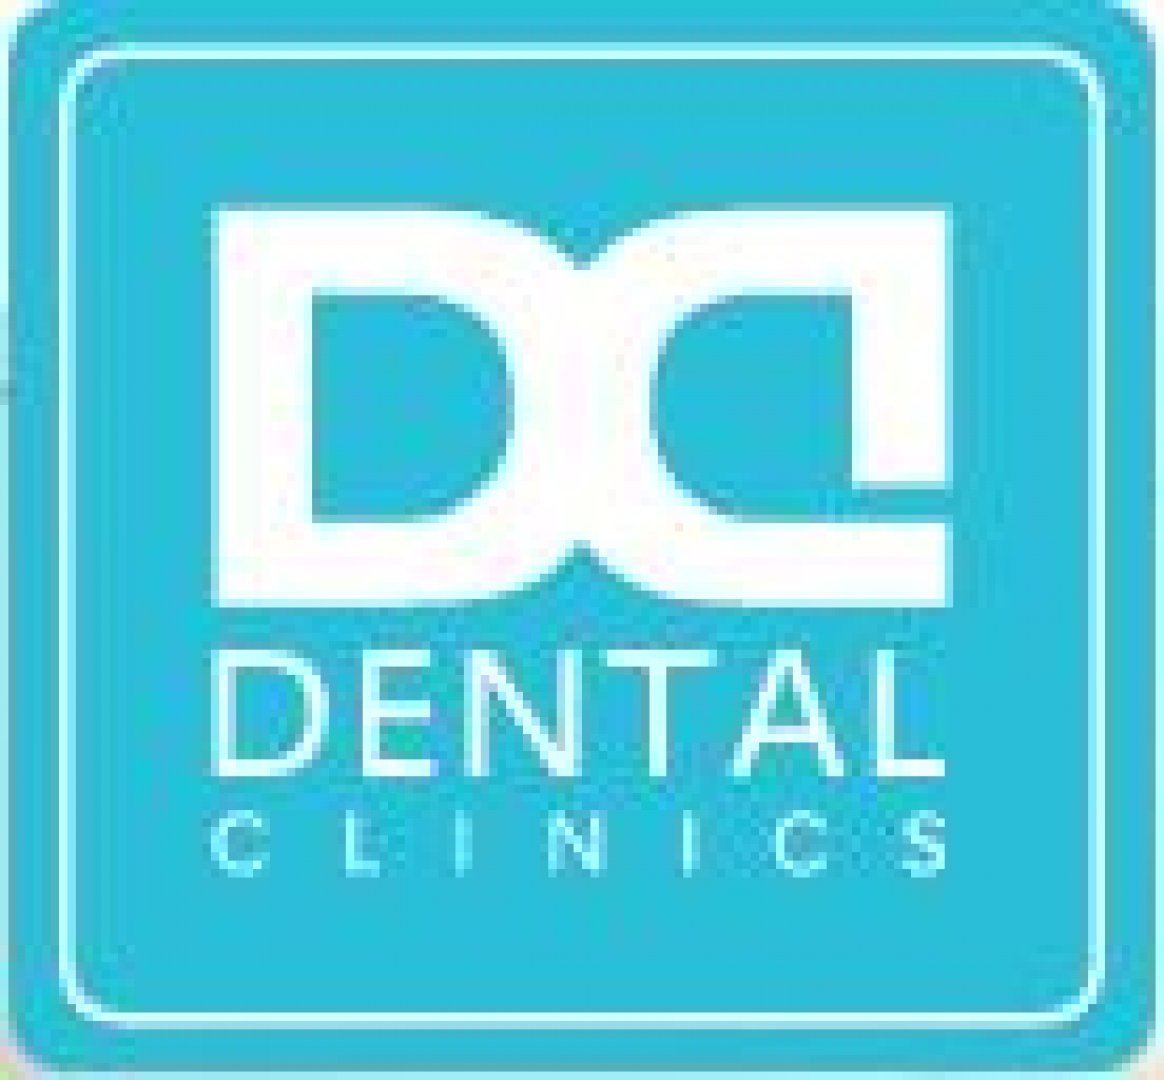 Dental Clinics Pijnacker